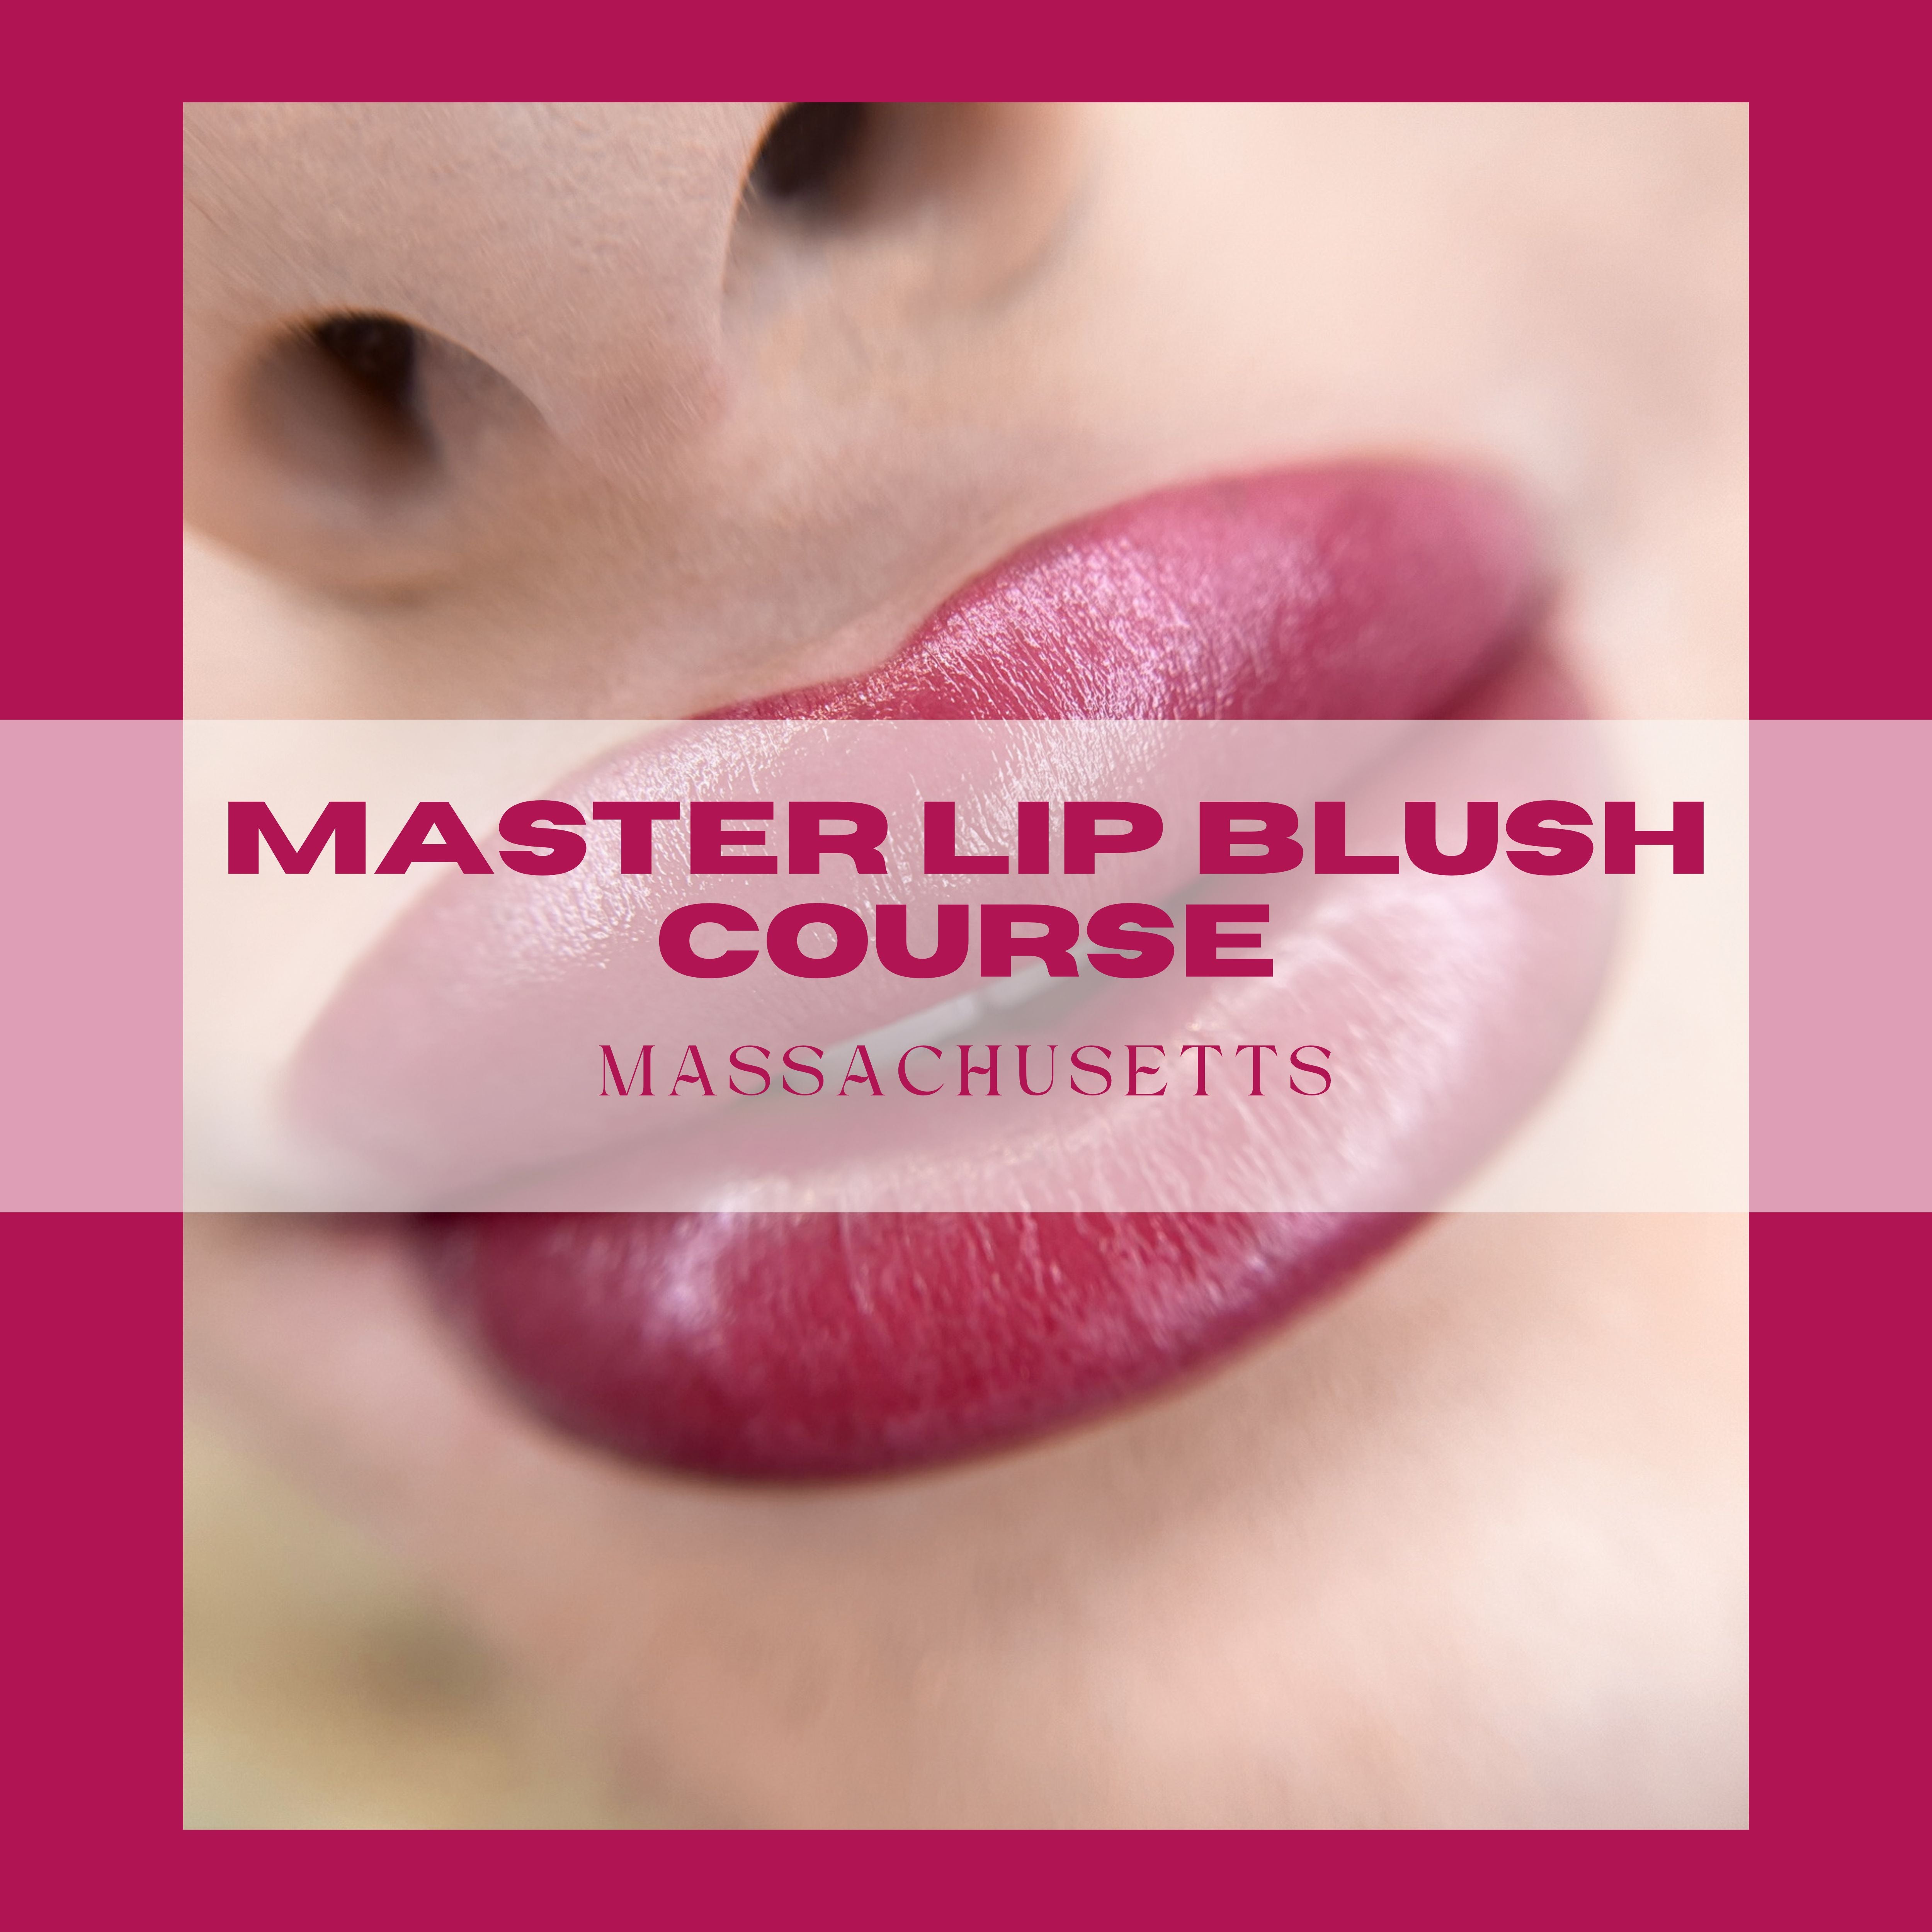 Master Lip Blush Course - Massachusetts